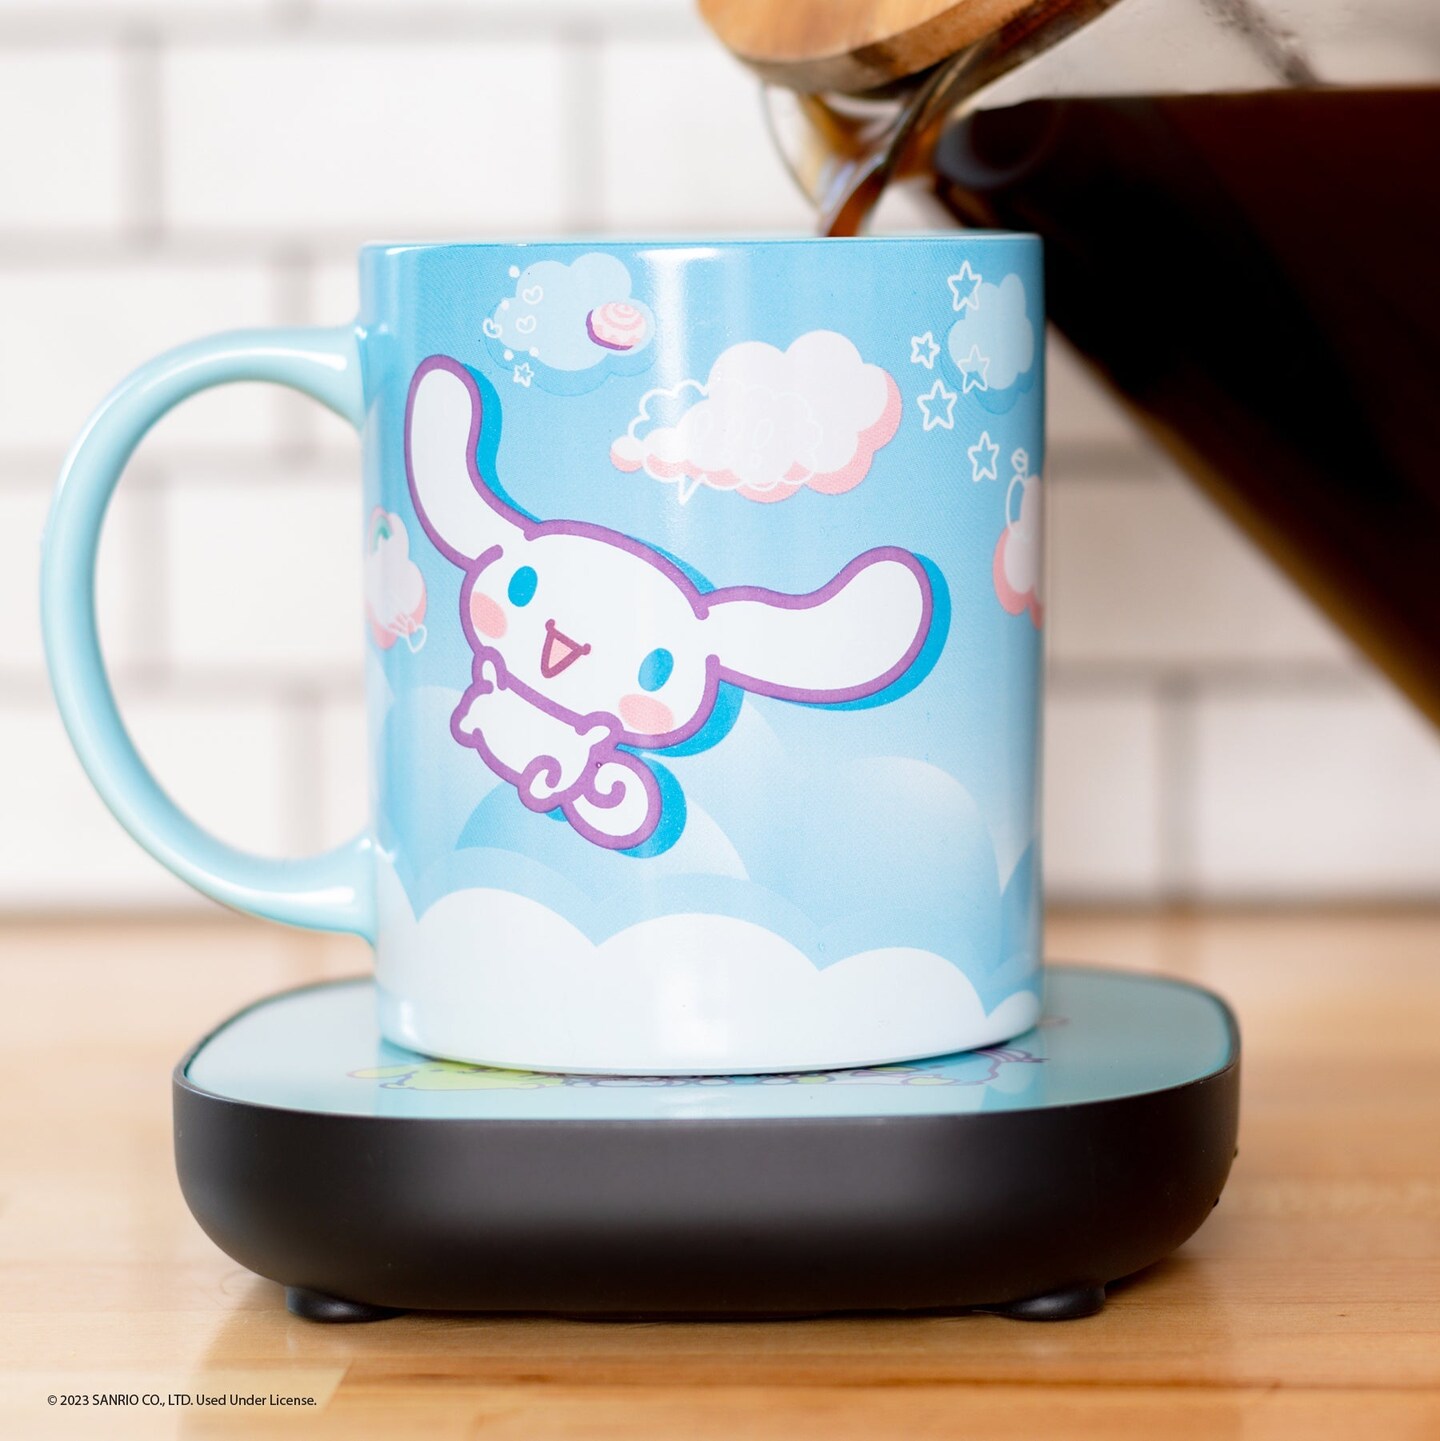 3D Sewing Machine Coffee Mug Ceramic Tea Cup with Quilting Design